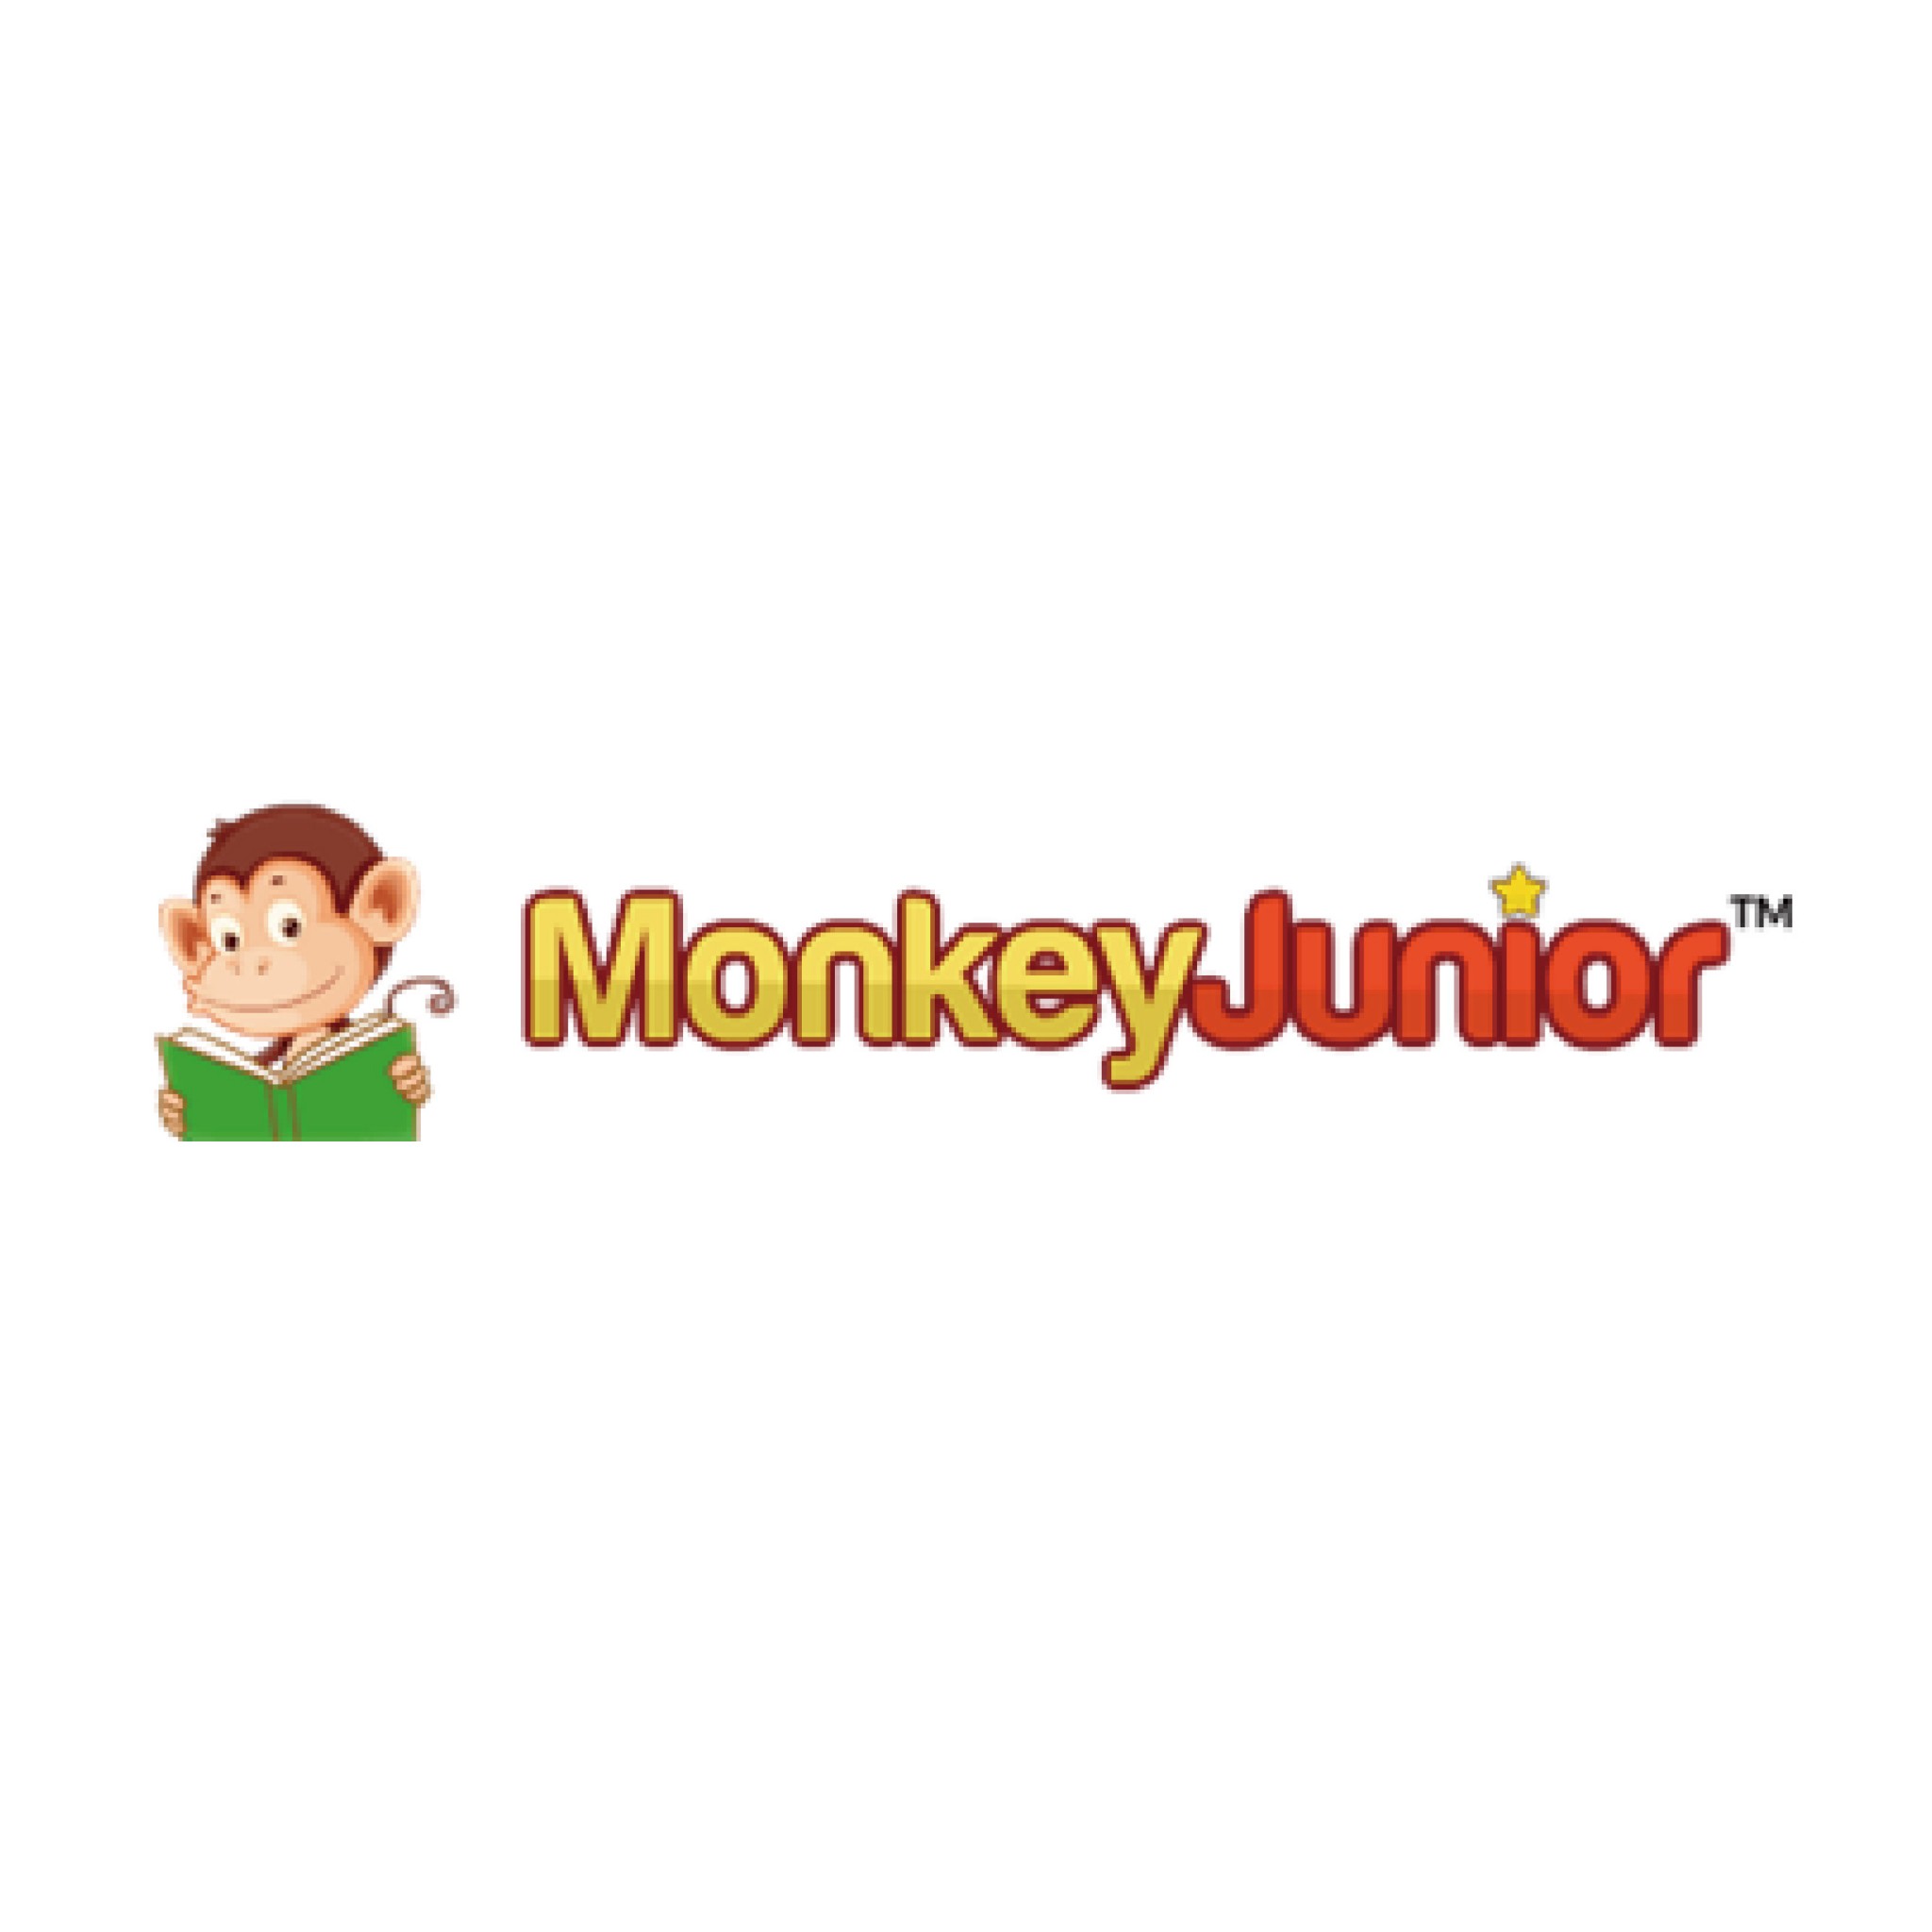 monkey junior not working on amazon fire